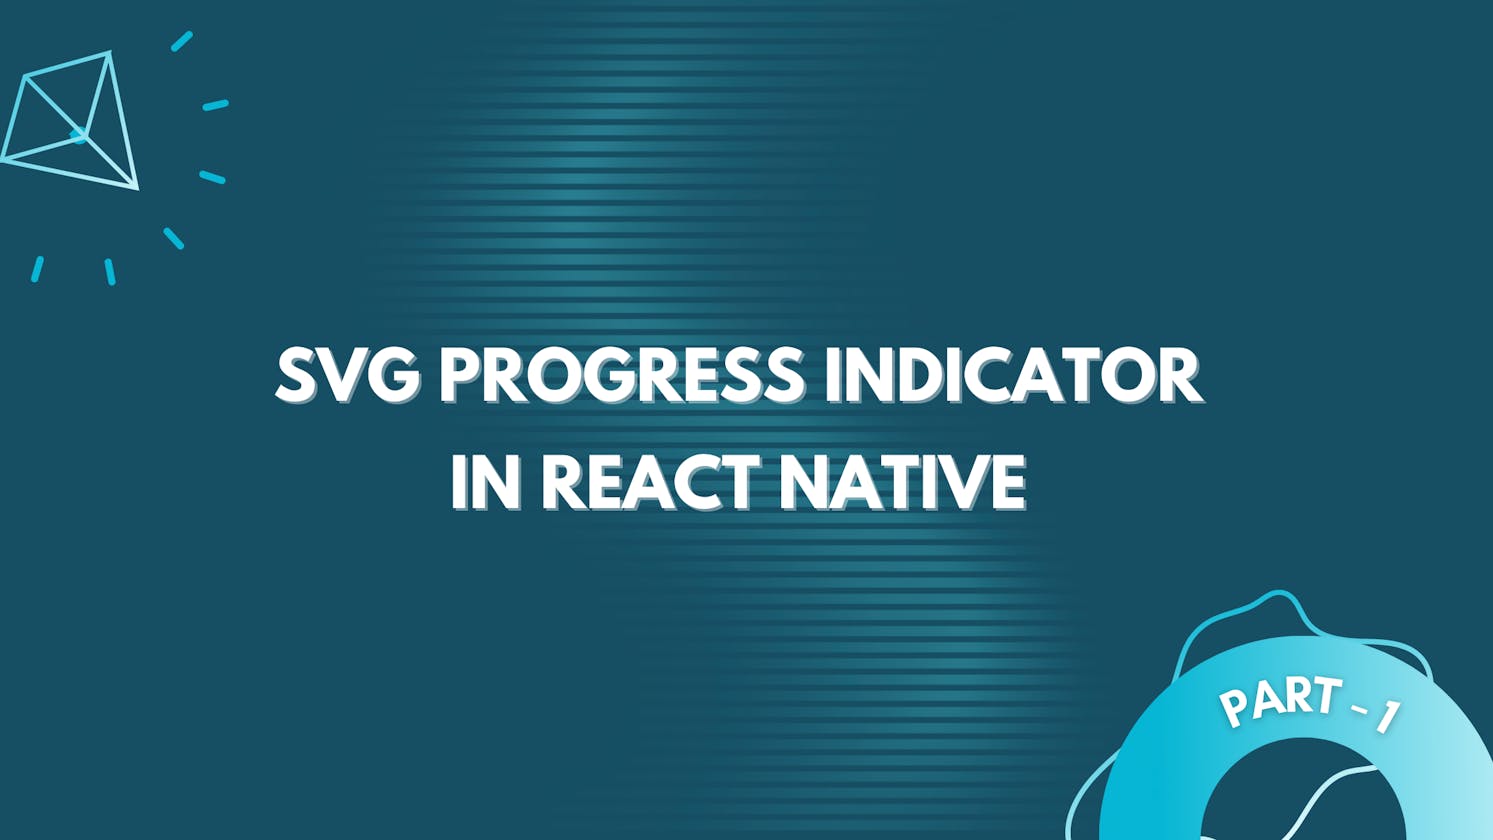 SVG progress indicator in react native - Part 1